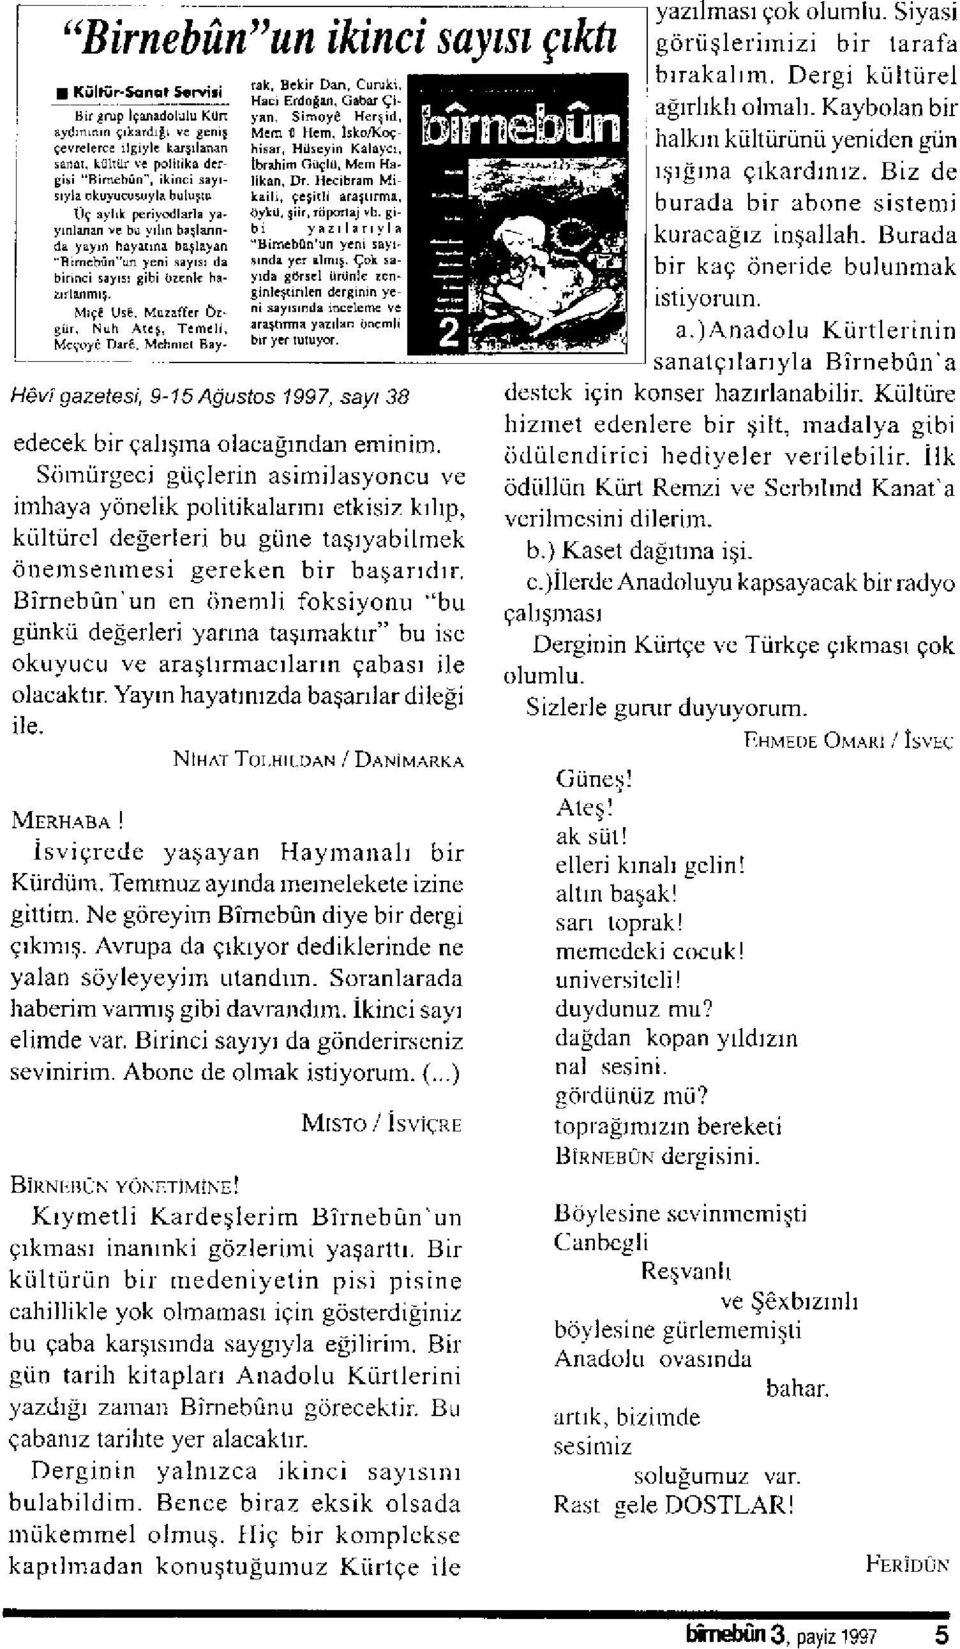 m.li, Mcroyi Drra, M.hi,.r B,y Hevi gazetesi, 9-15 Agustos 1997, sa4 38 edecel bir galrqrna olaragrndan enrinirn.